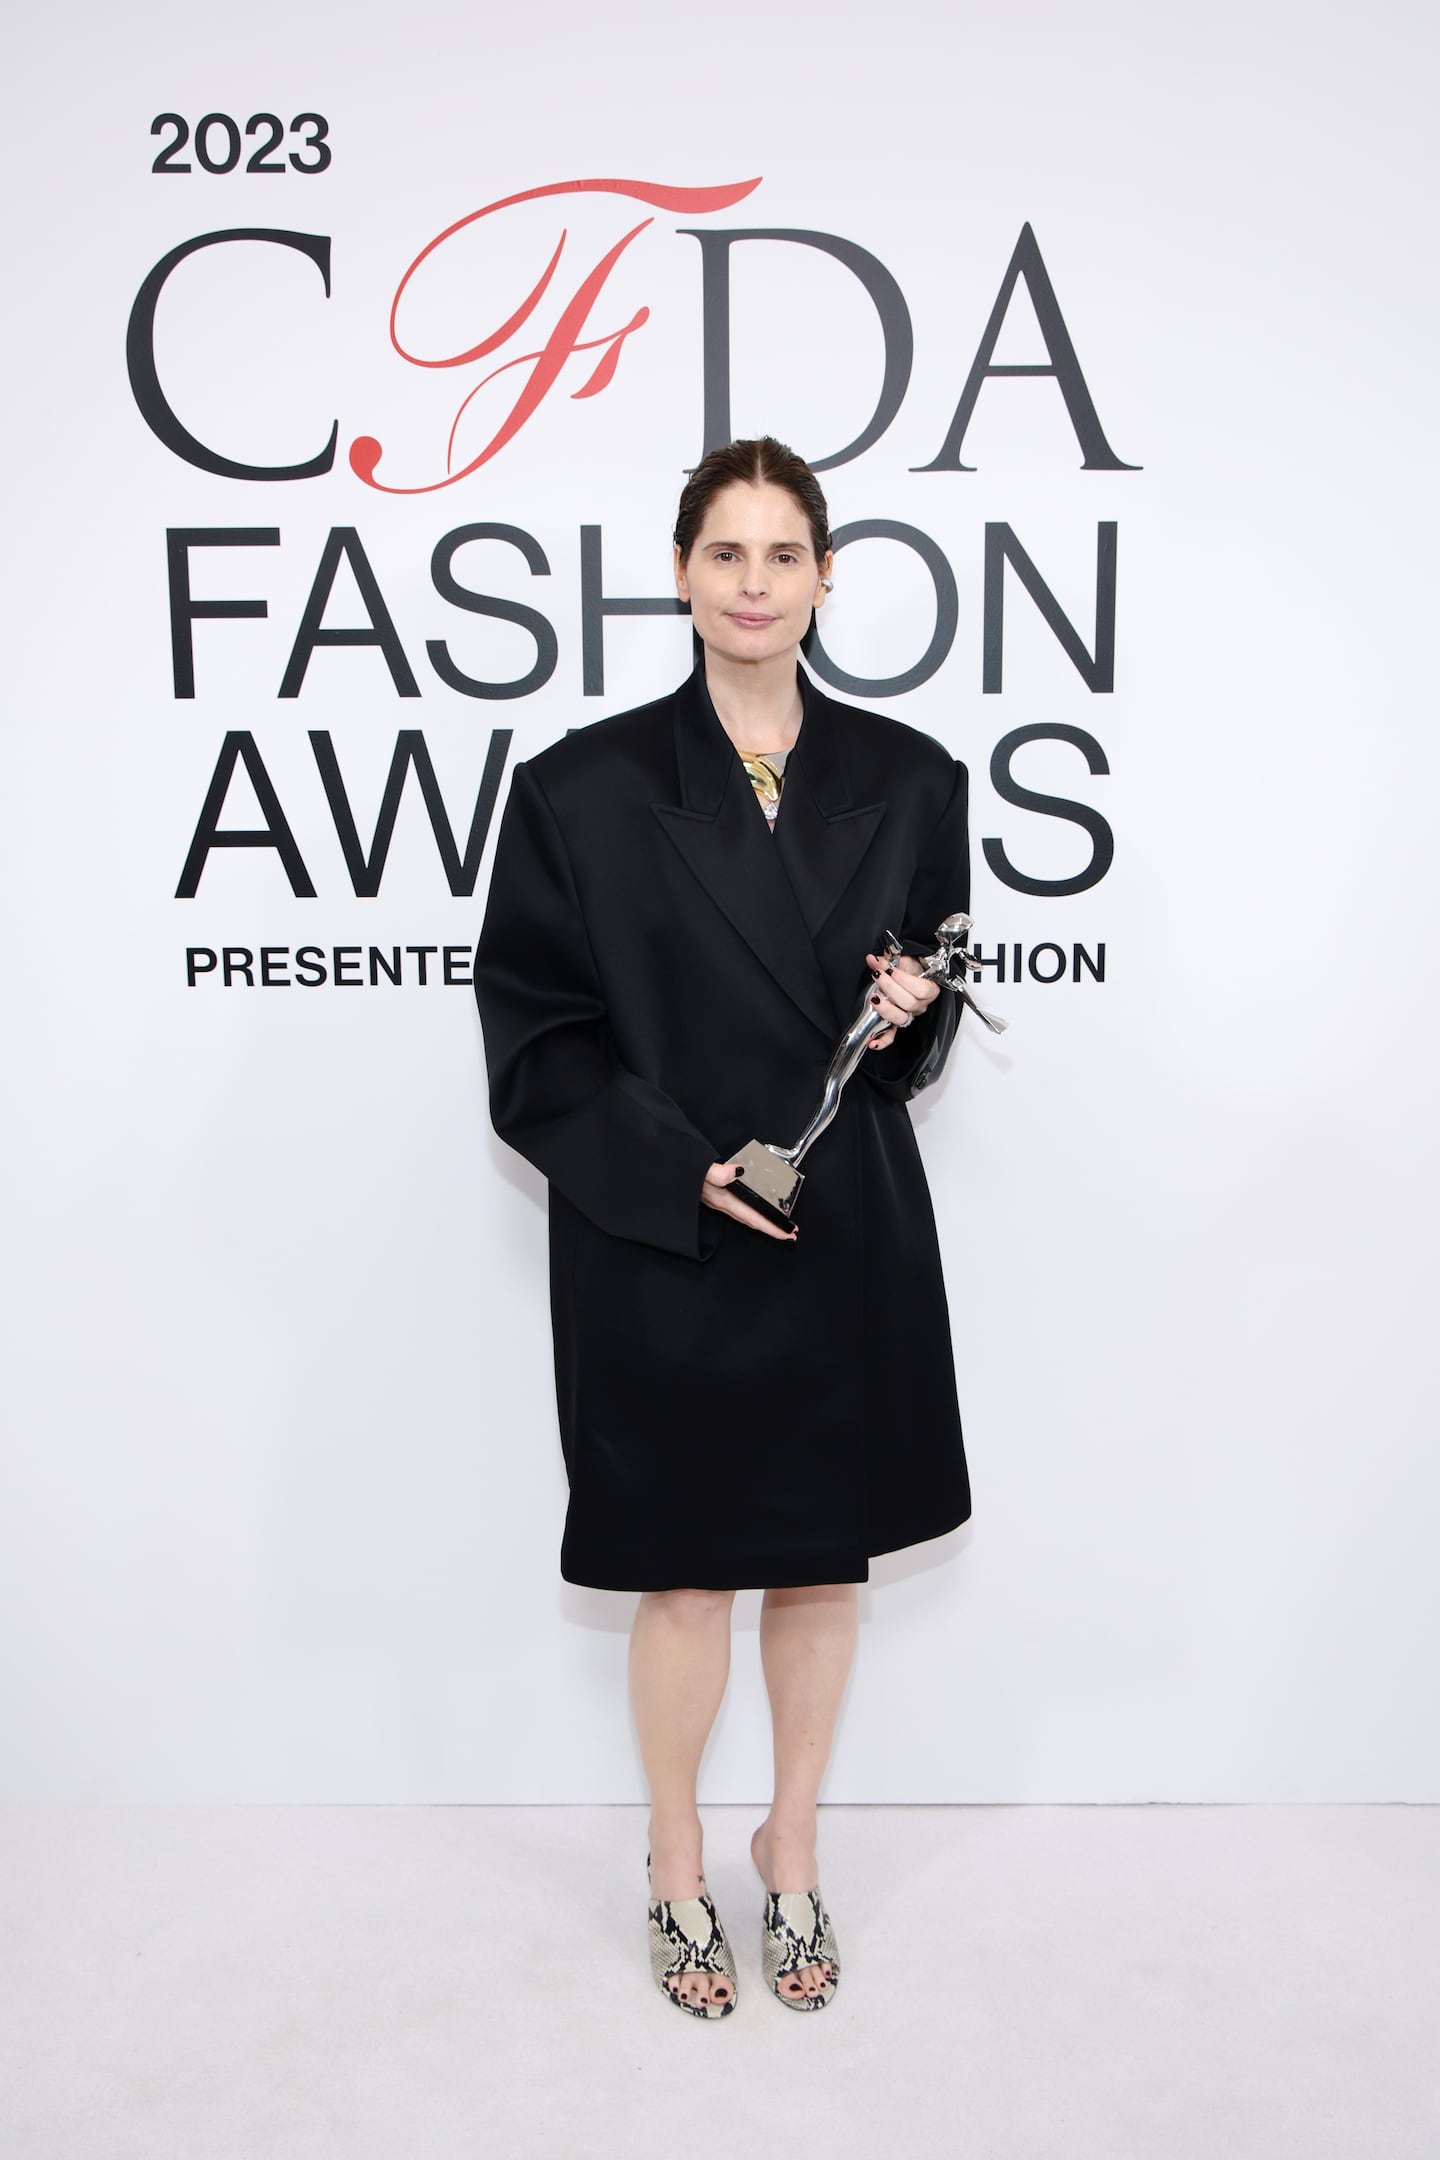 Catherine Holstein won the CDFA's American Womenswear Designer of the Year award.